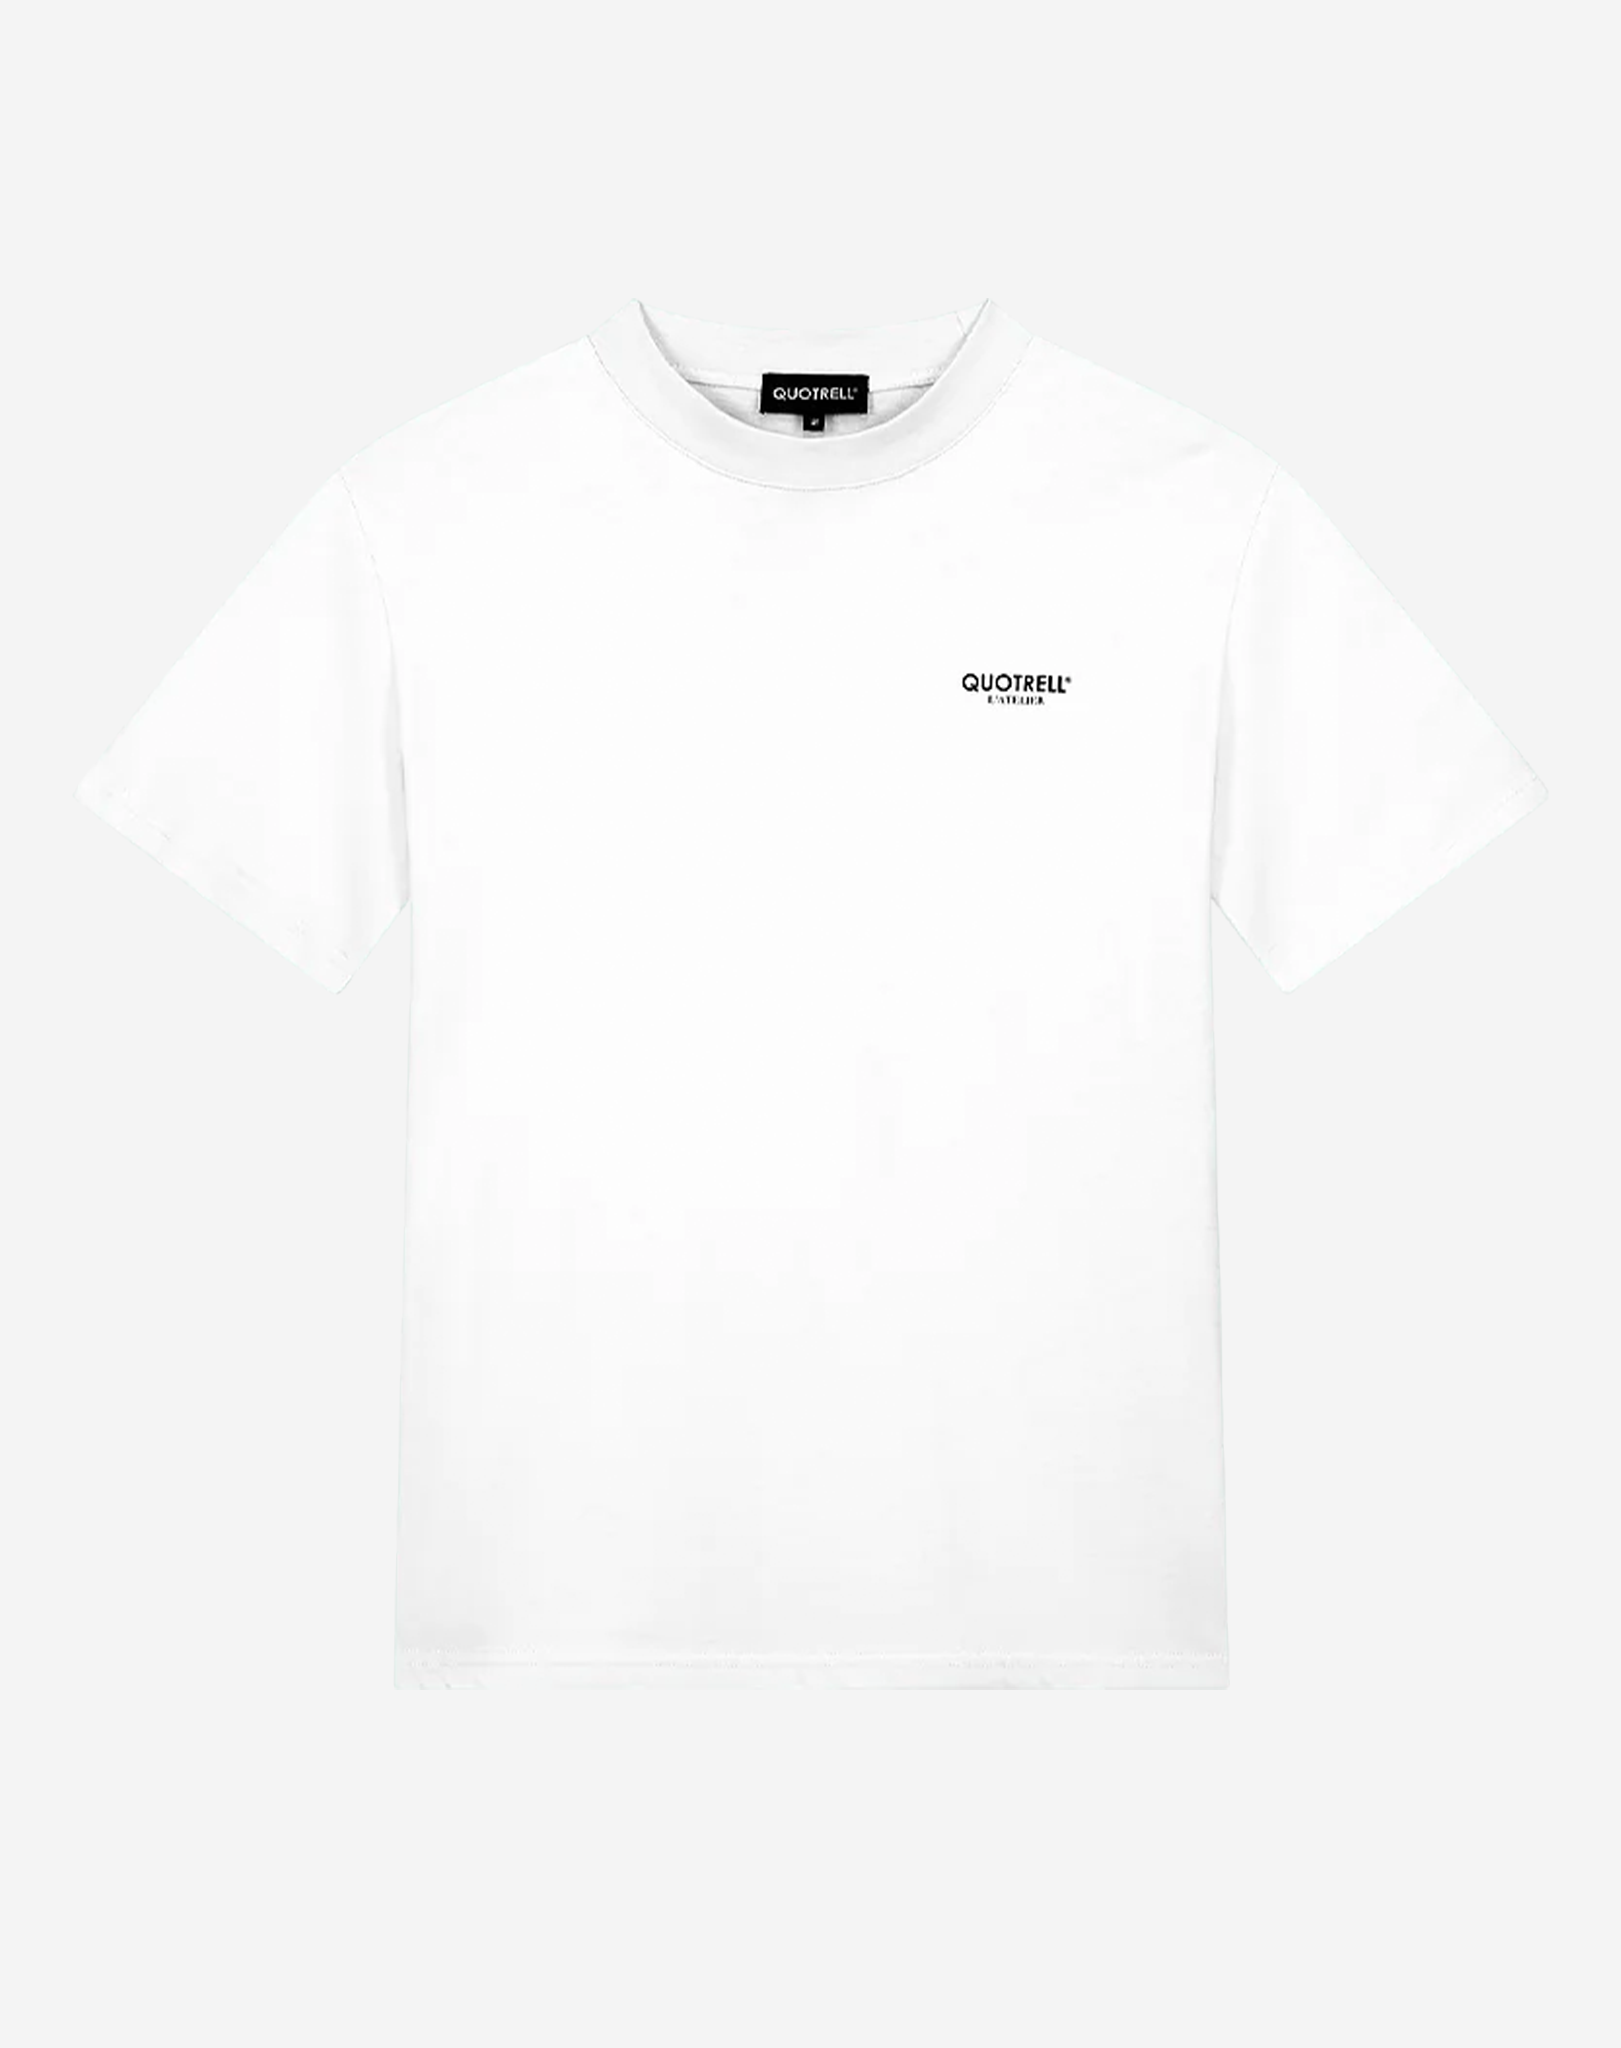 Quotrell L'Atelier T-Shirt Wit - Zwart